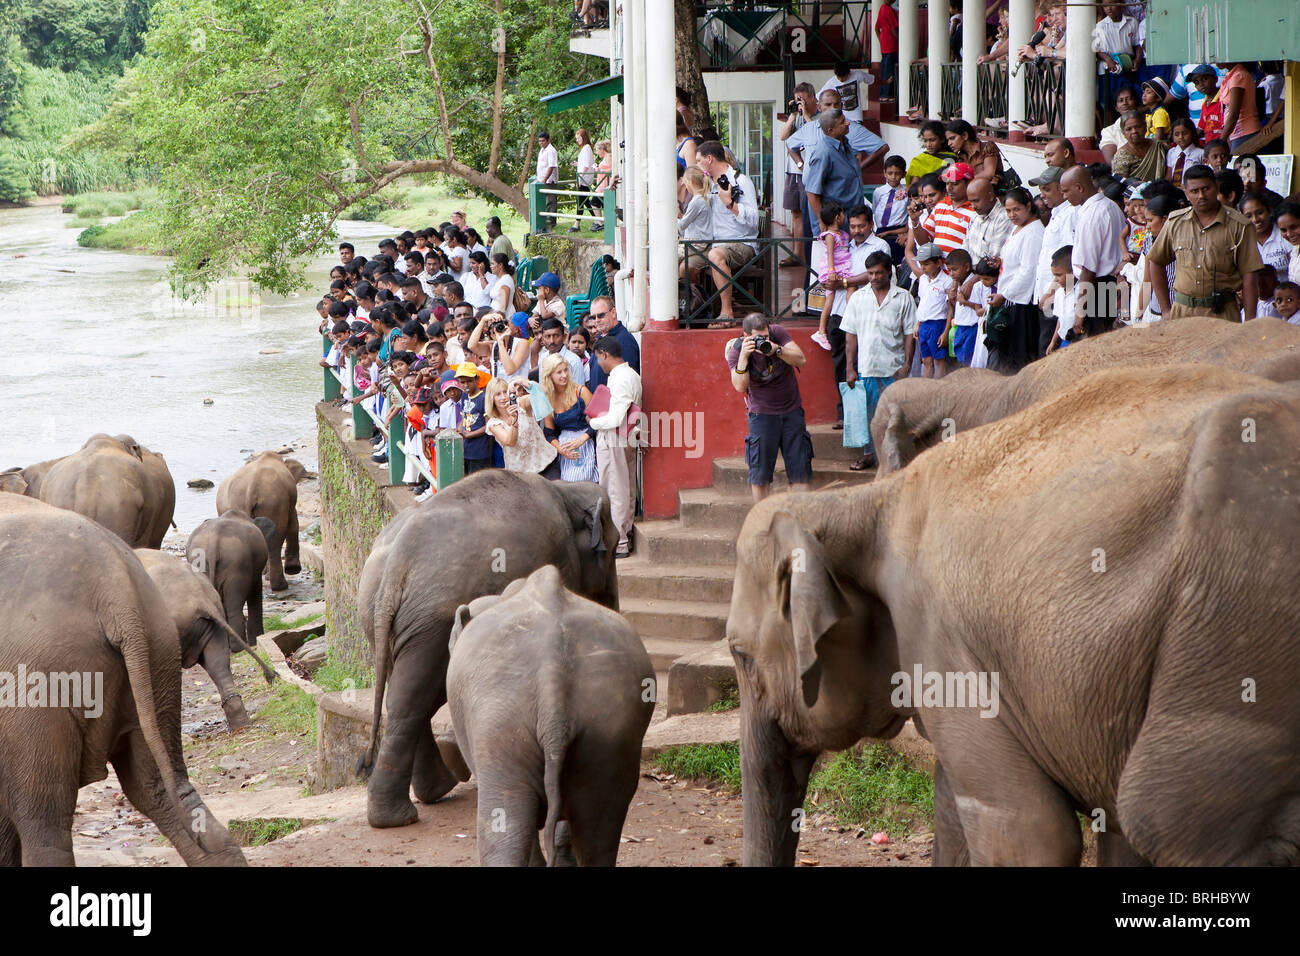 Beobachten Elefanten Baden im Fluss Maha Oya Touristen in der Nähe von The Pinnawela-Elefantenwaisenhaus Stockfoto